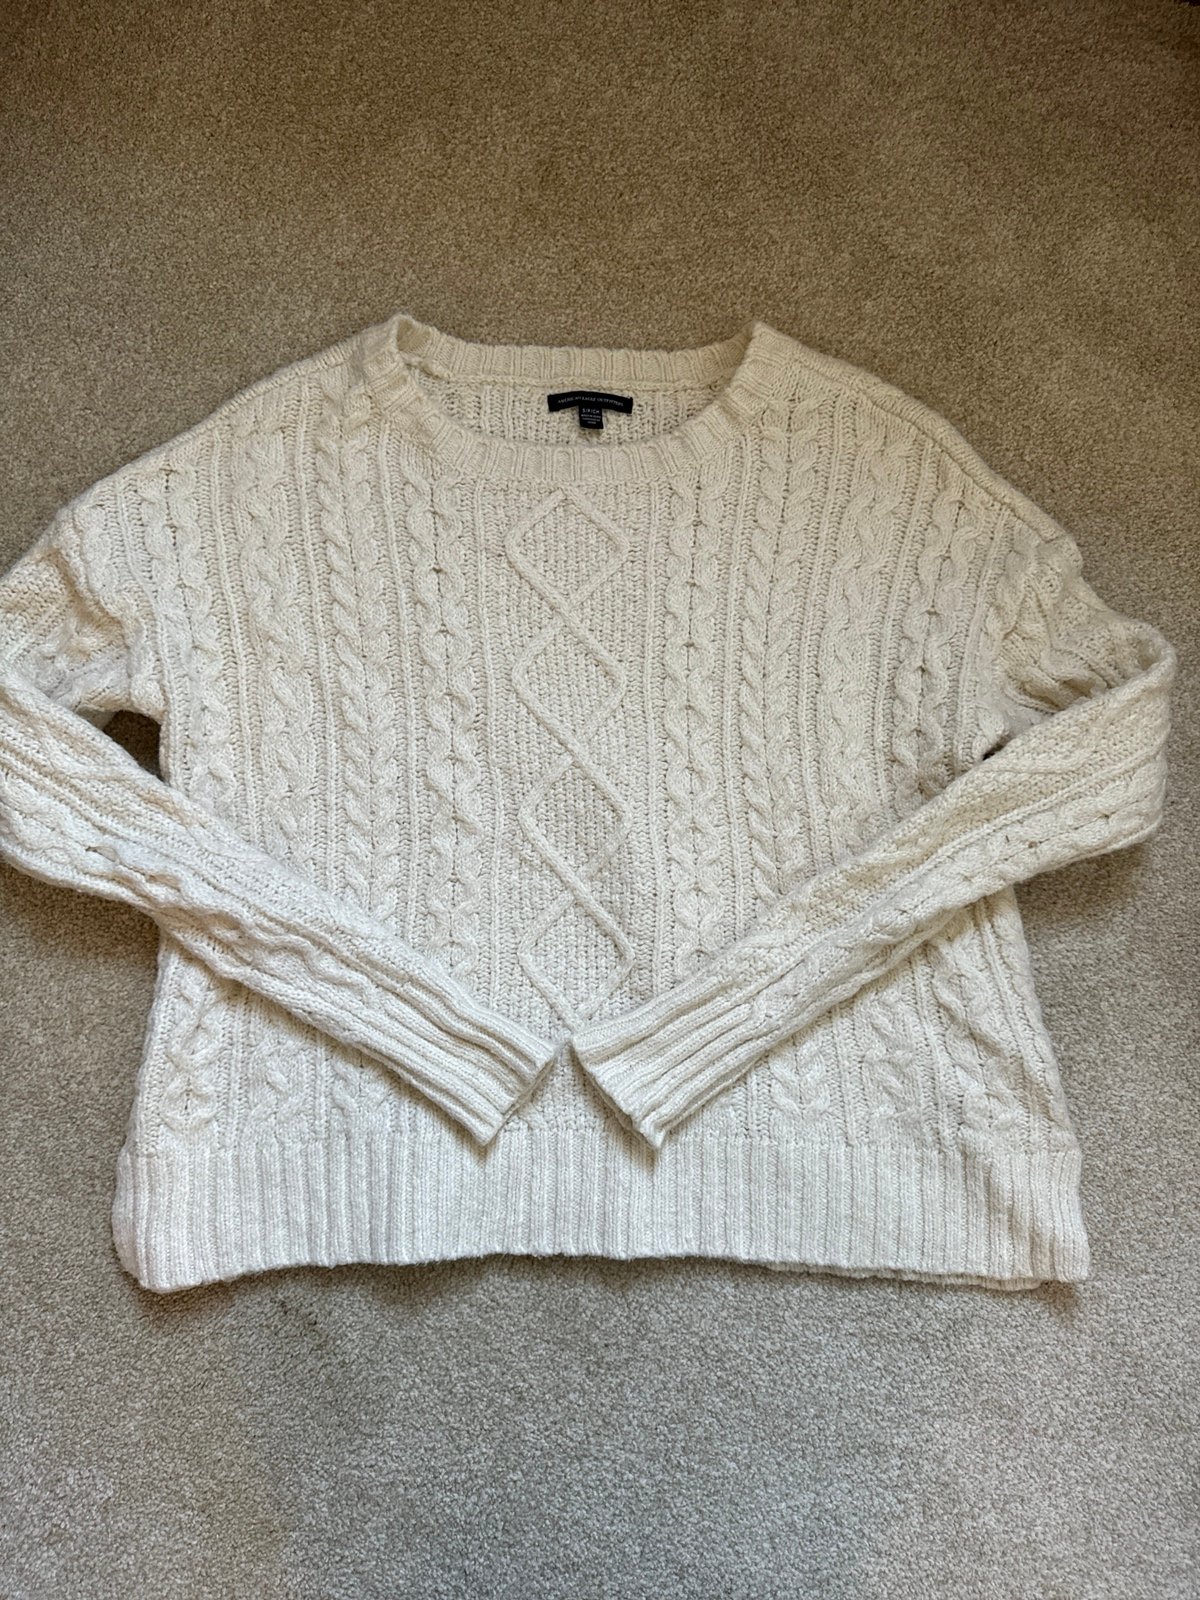 Fashion American Eagle Cable Knit Sweater Small hQNgaVd